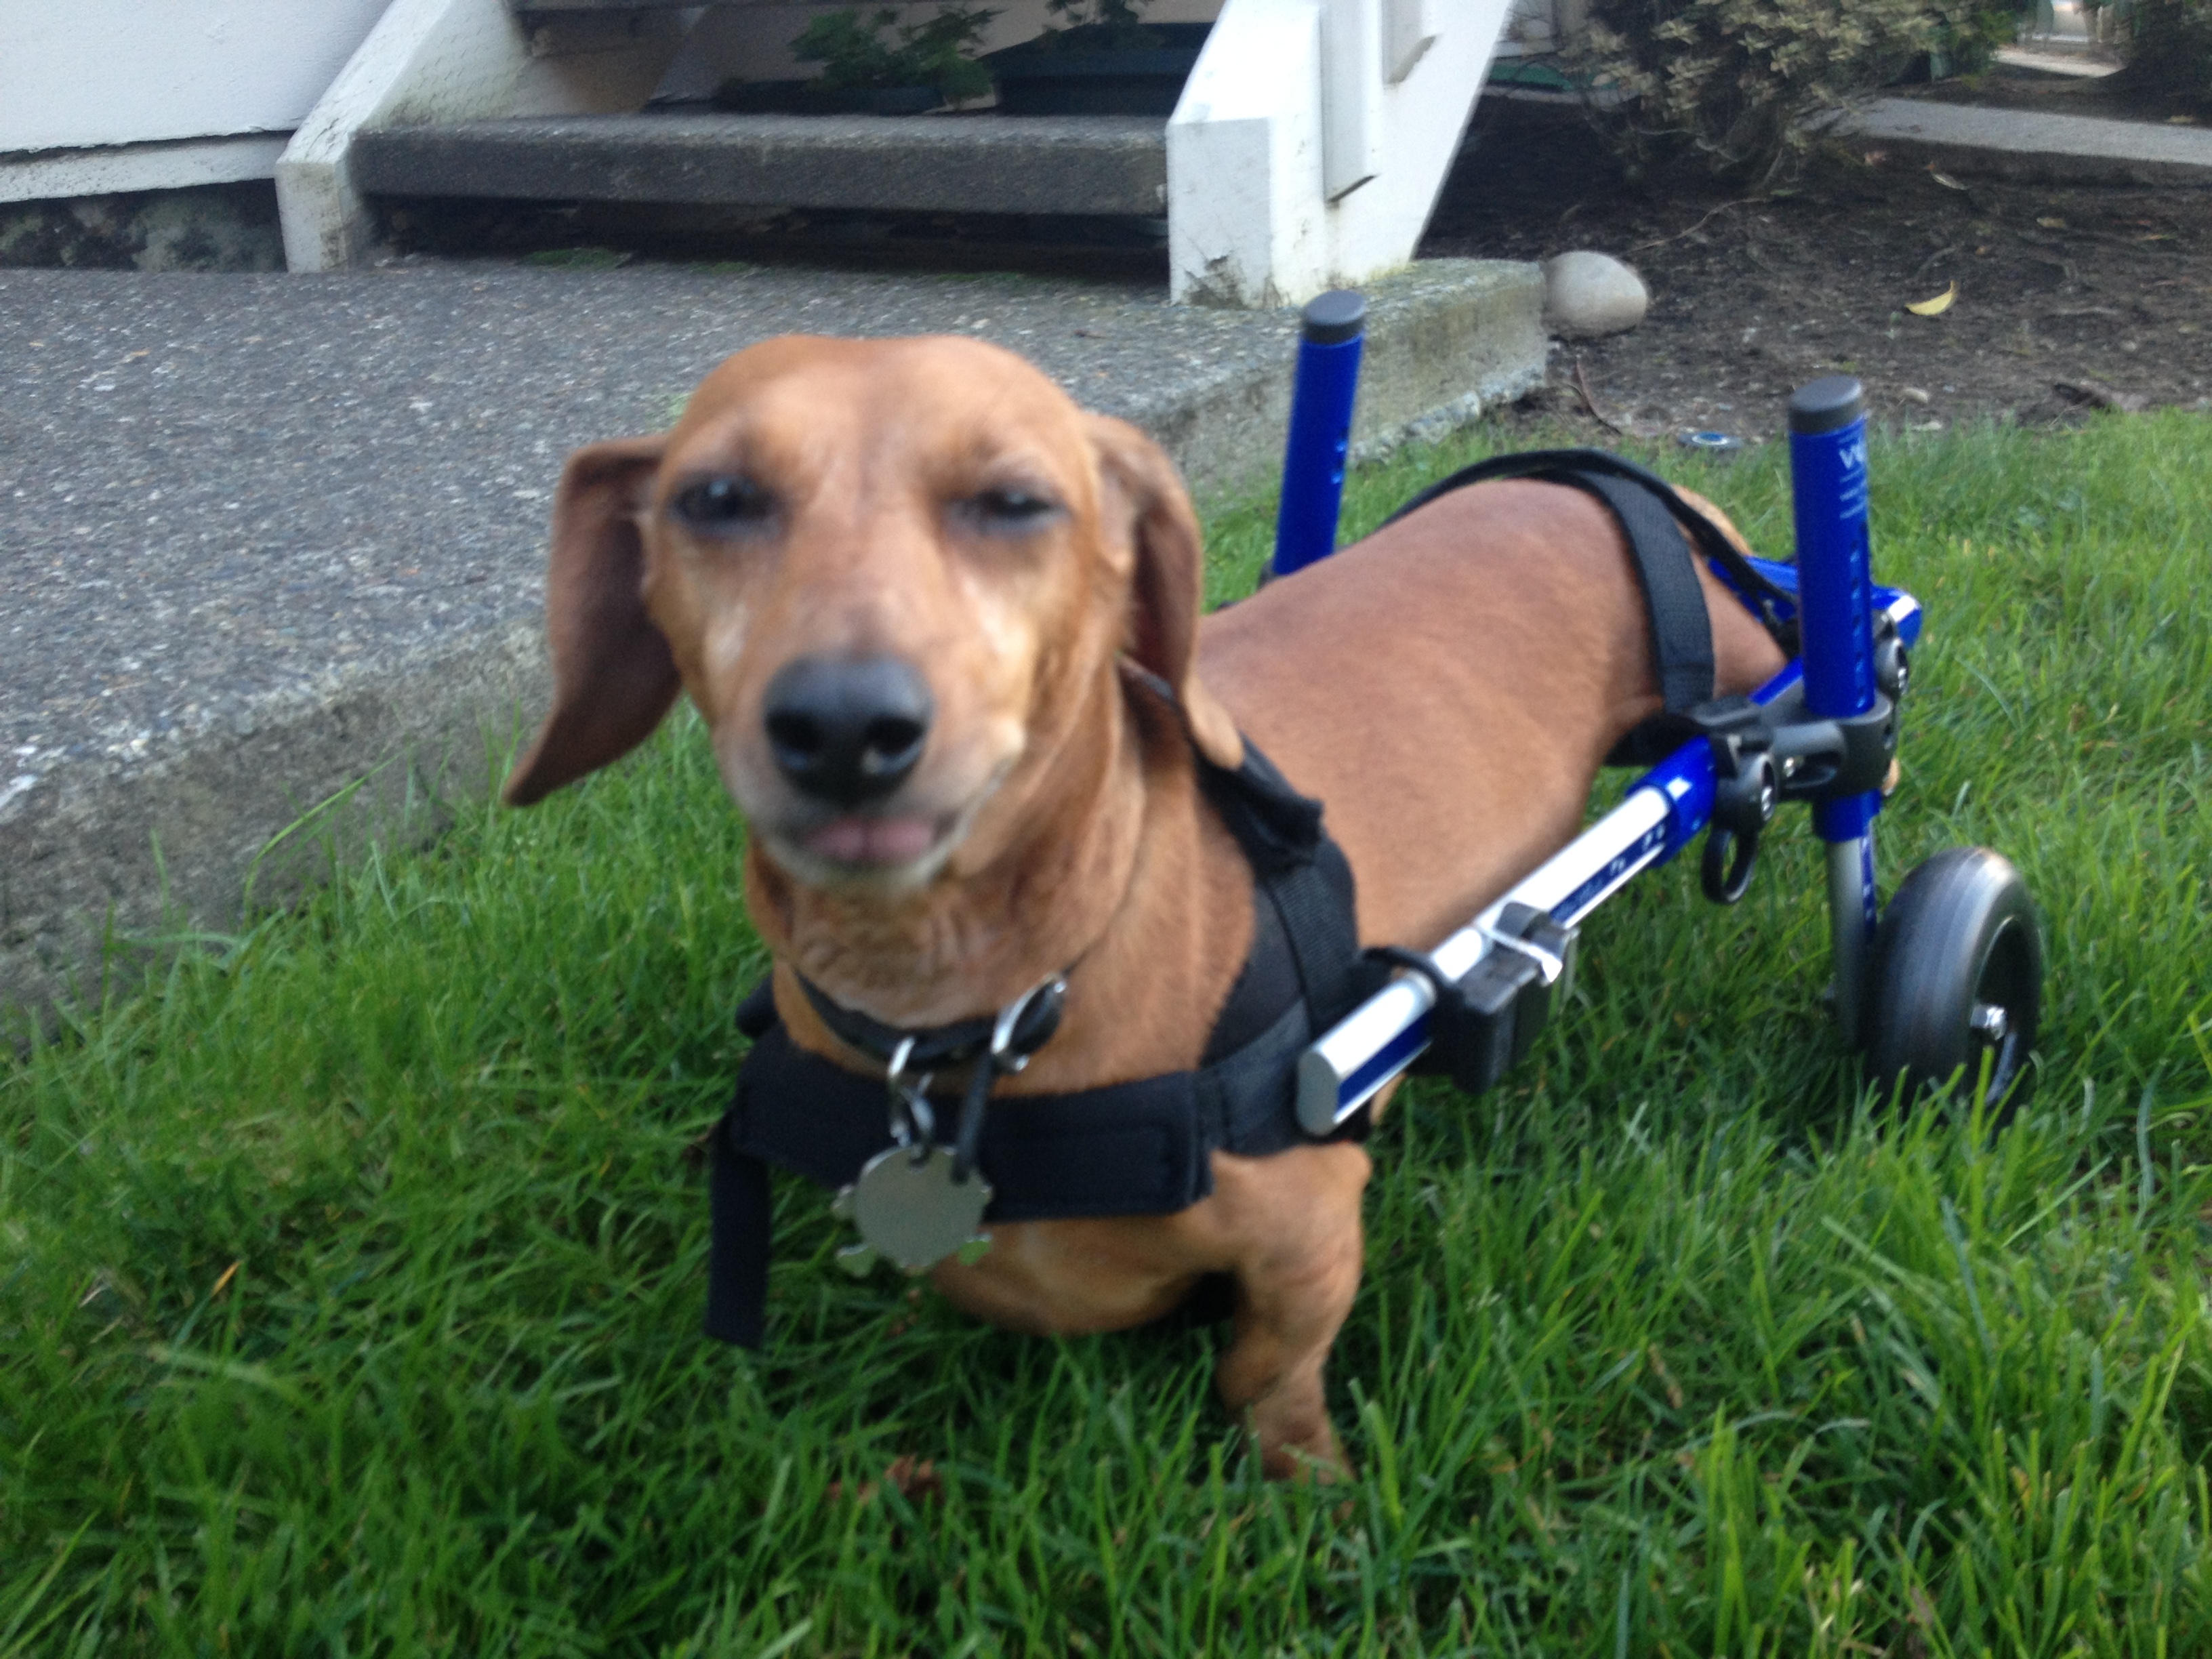 Paralyzed dachshund regains mobility in the Walkin' Wheels dog wheelchair